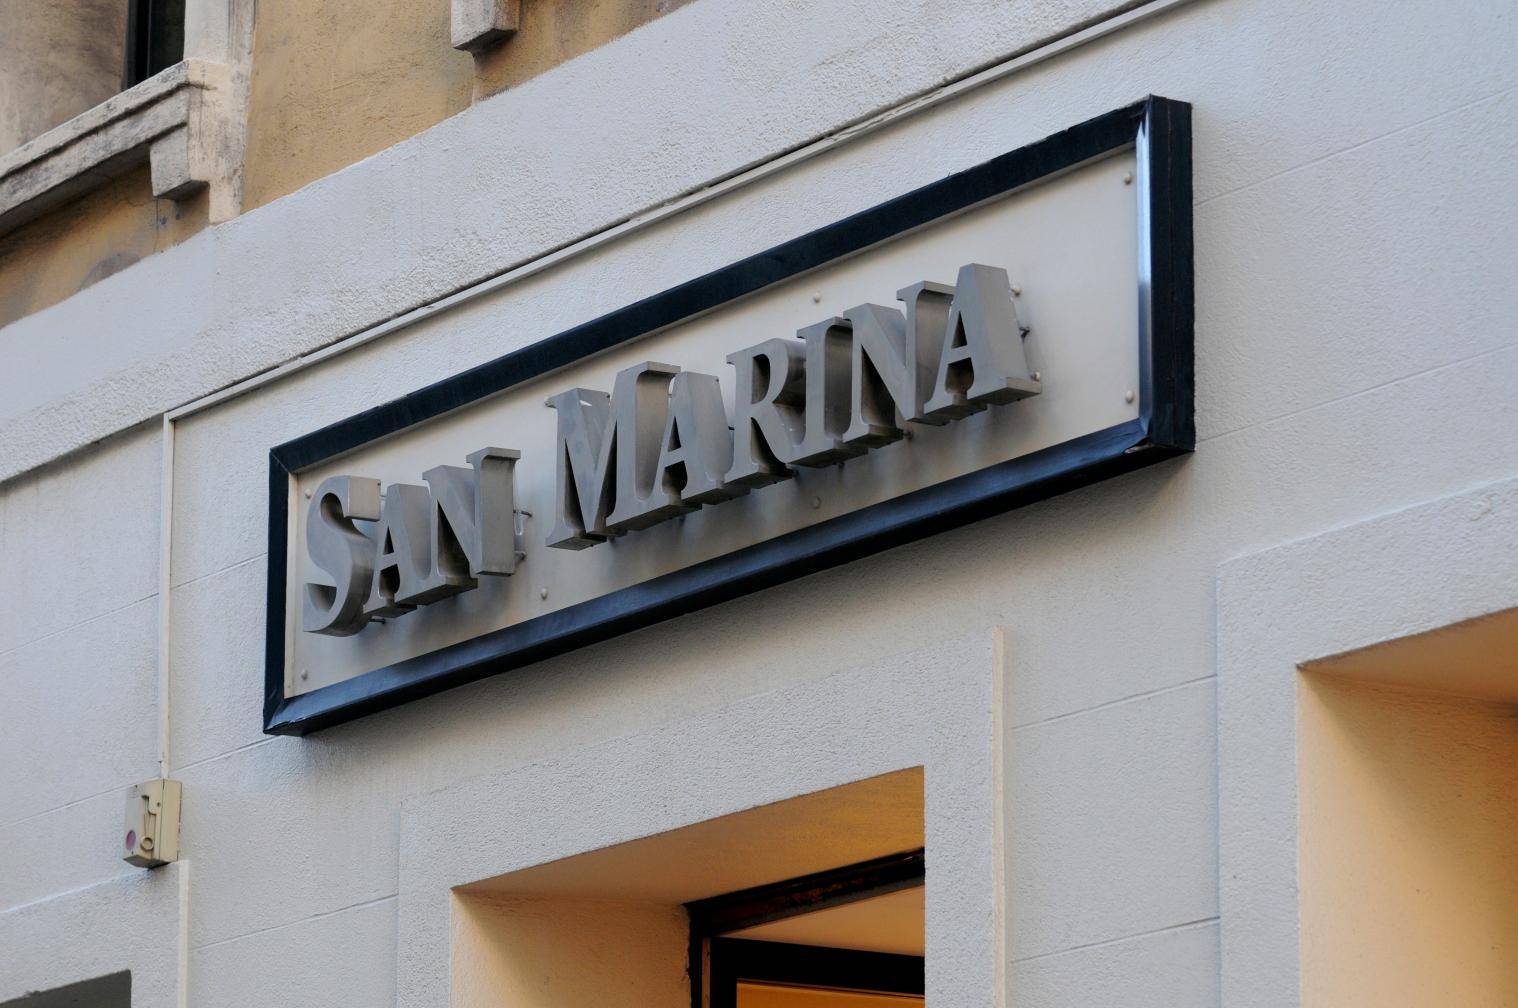 San Marina : samedi, dernier jour avant fermeture définitive